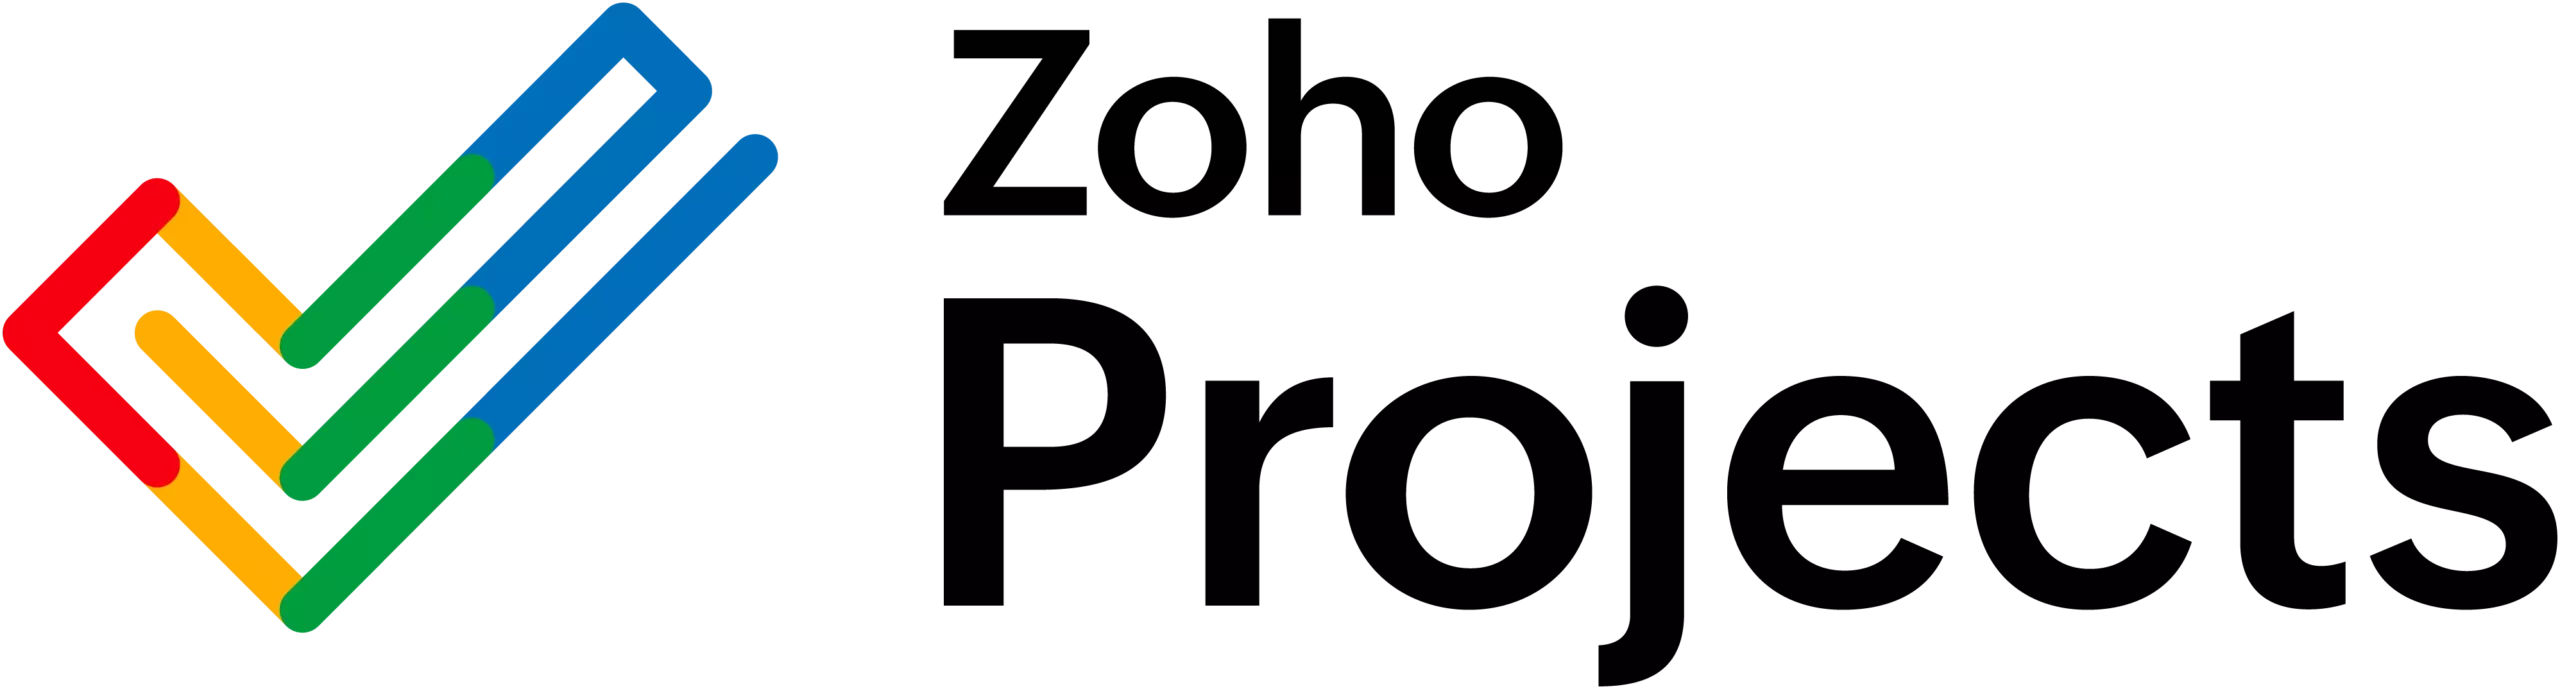 Zoho Projects logo